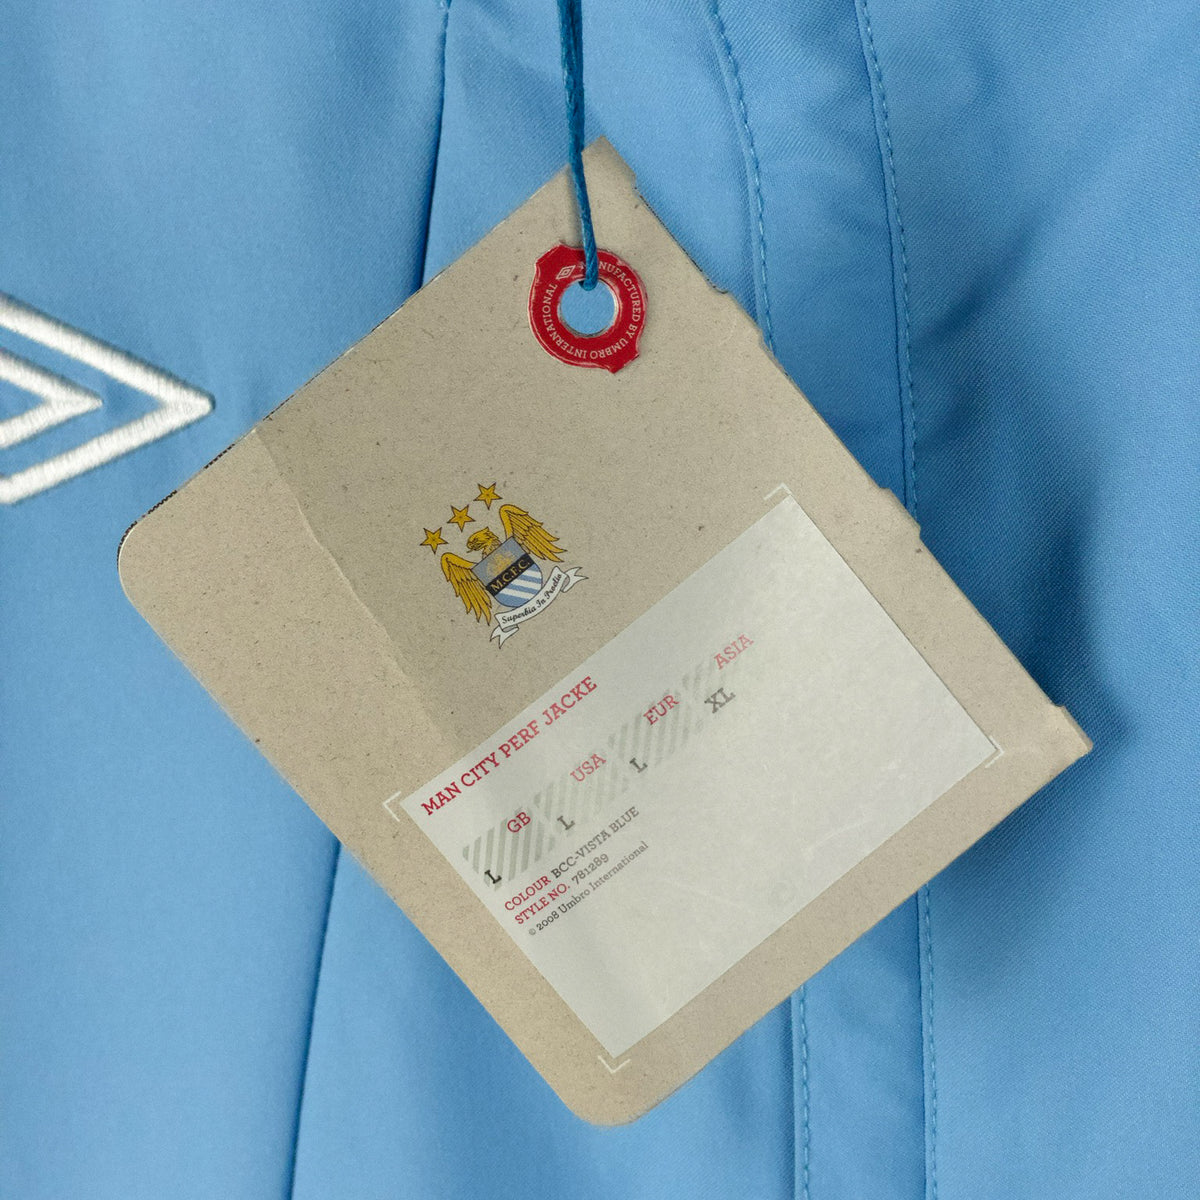 2009-2011 Manchester City Umbro Jacket BNWT